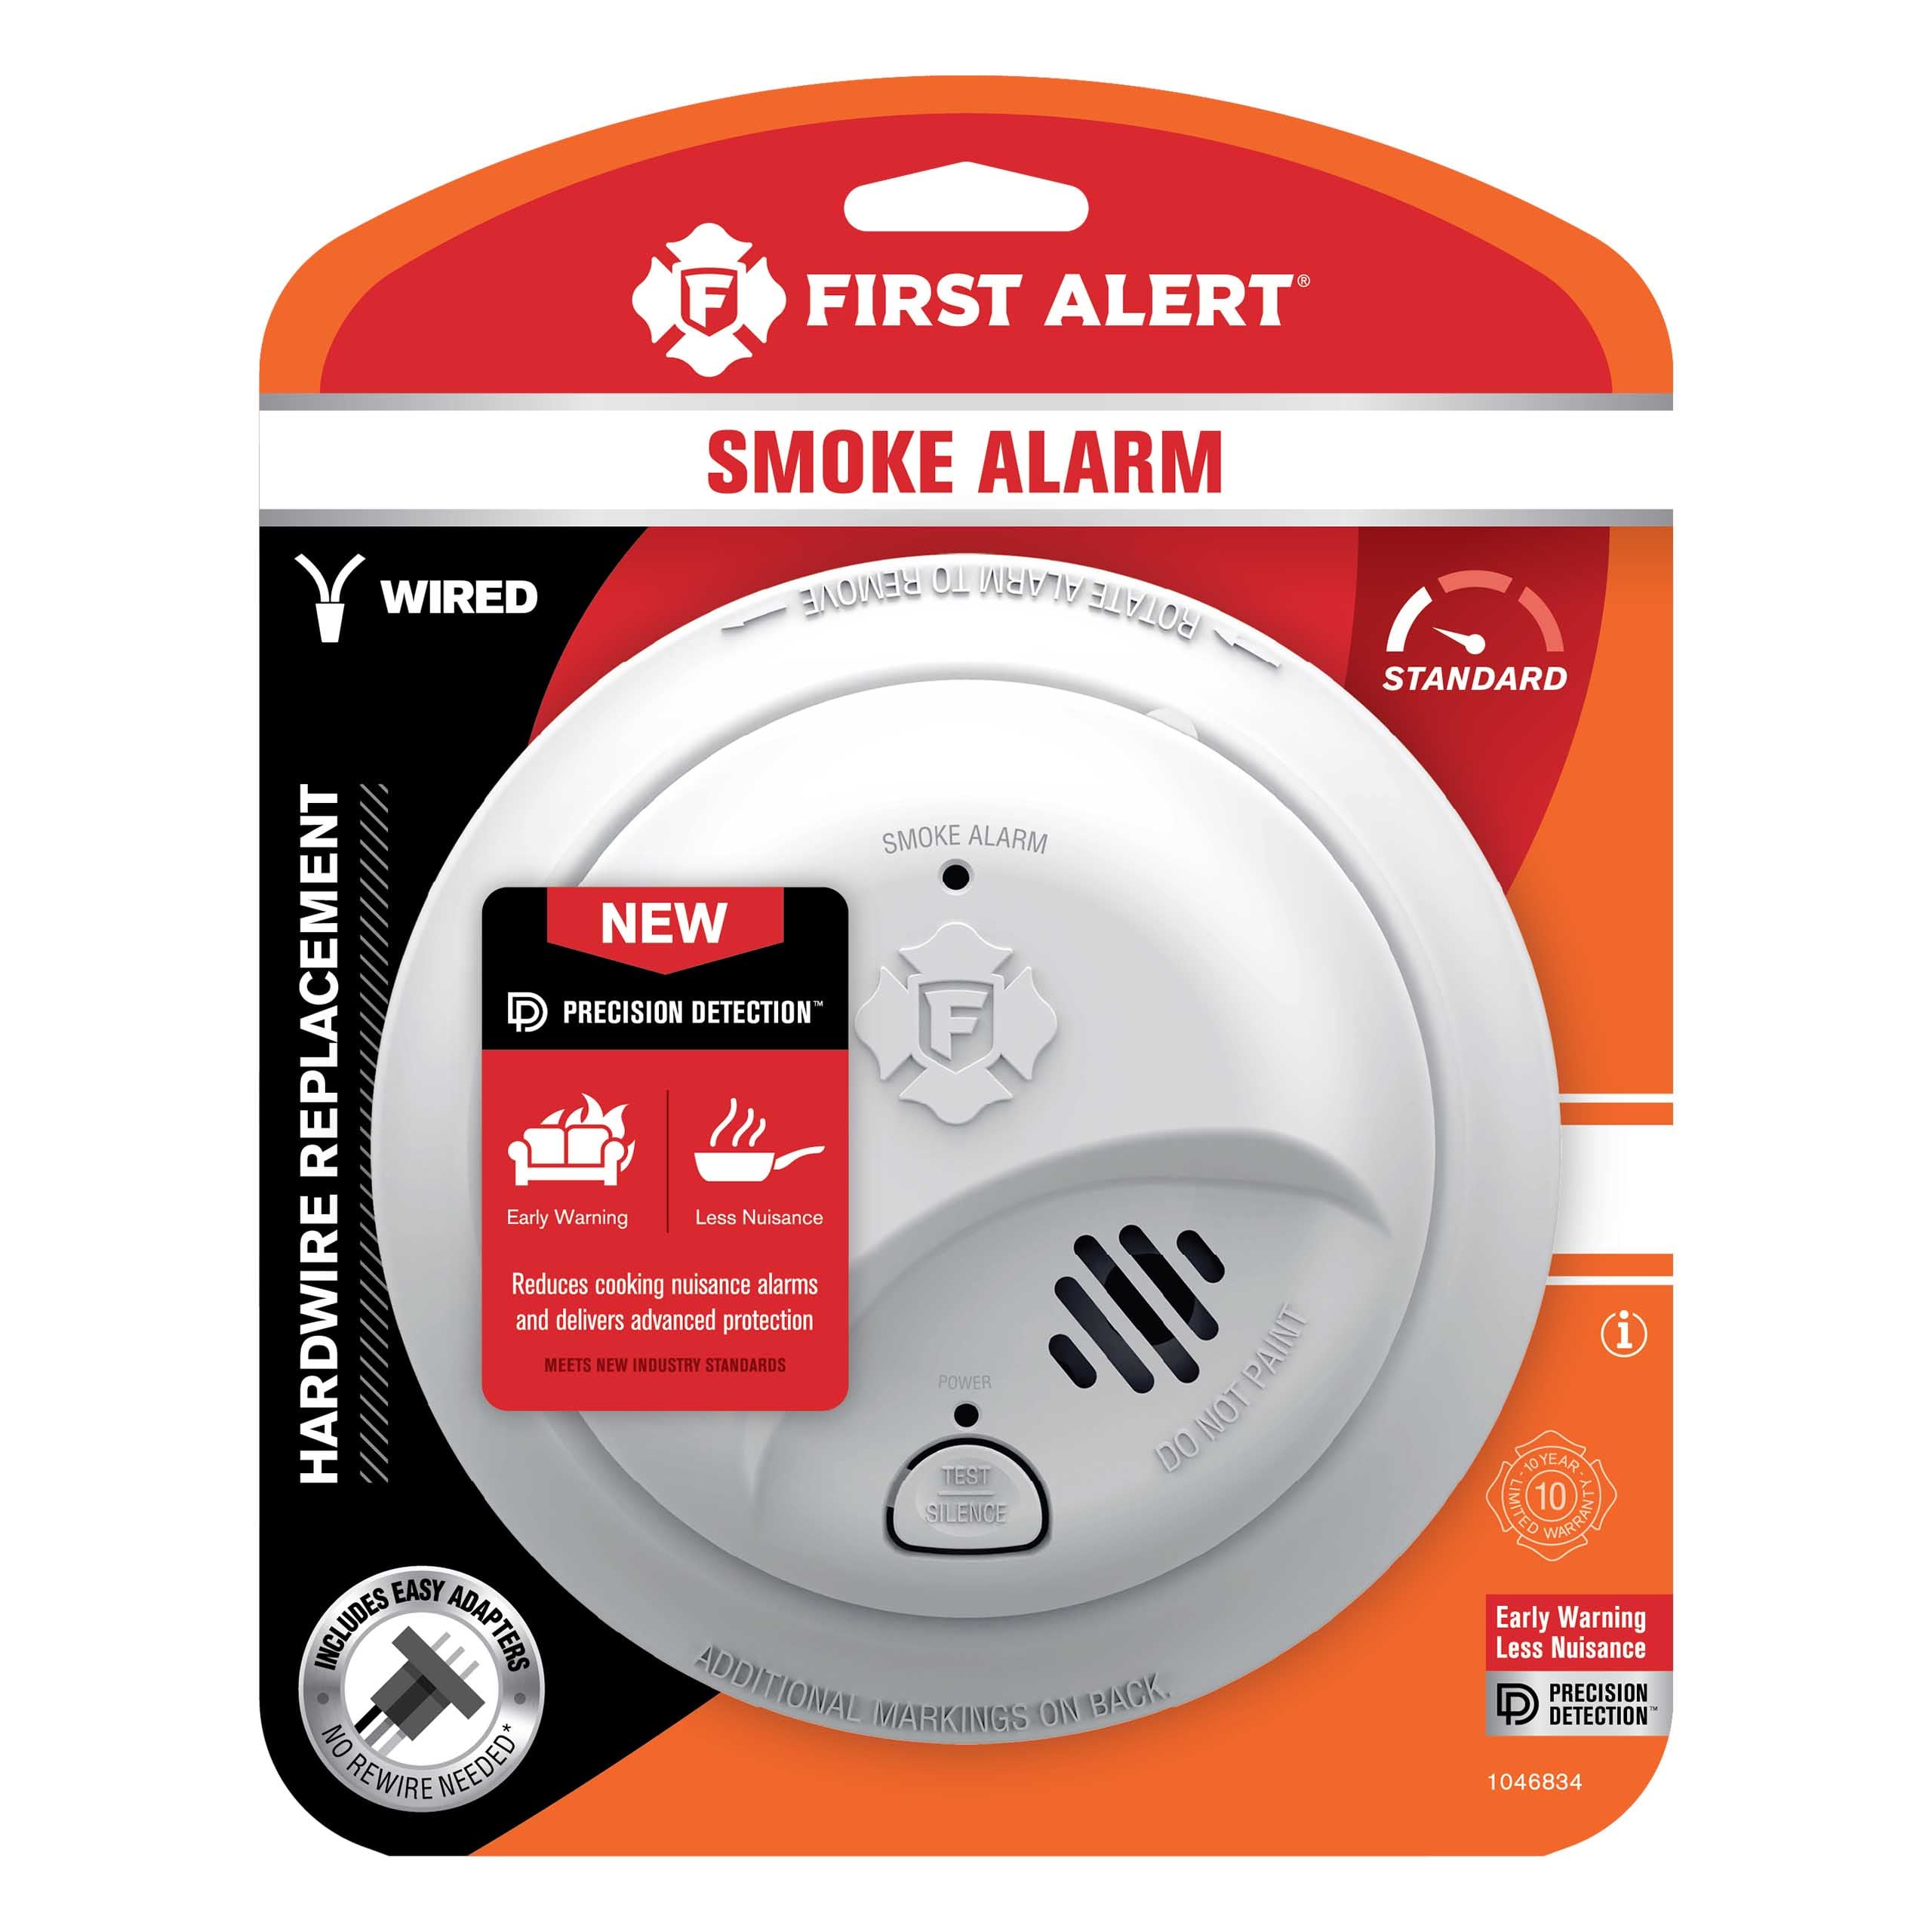 7 First Alert Smoke + CO Alarms For $50 In Carmel, IN